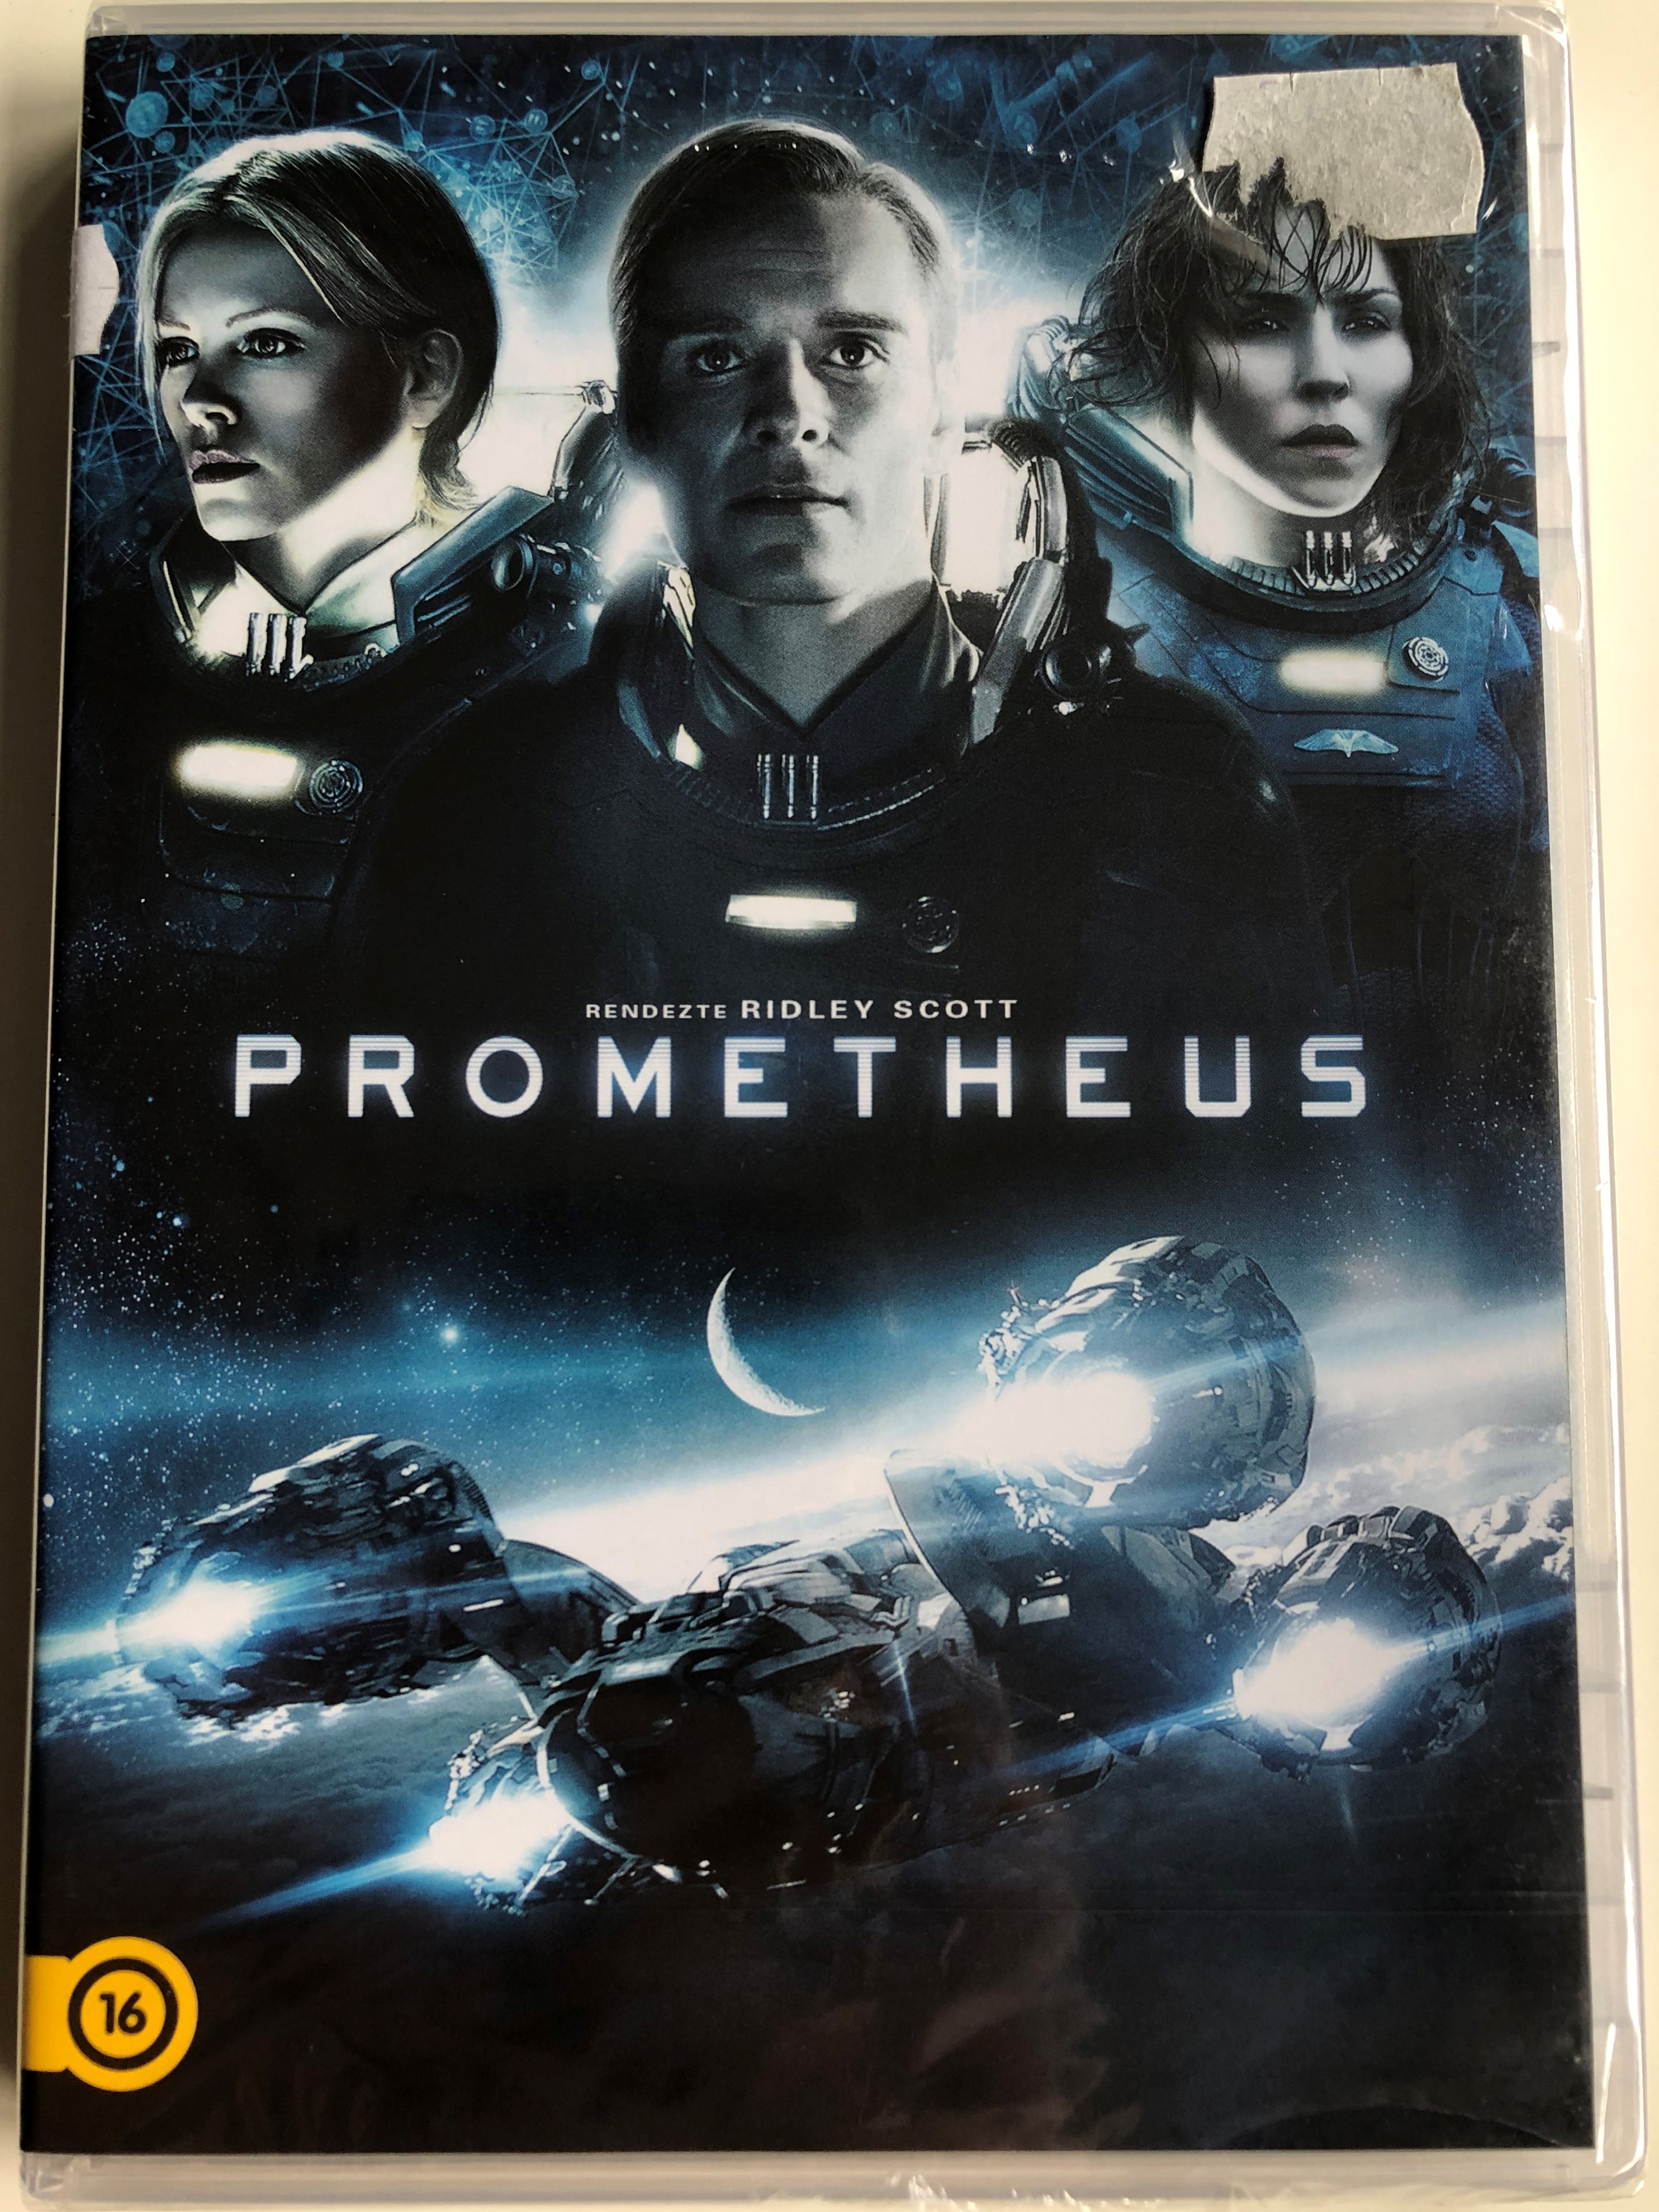 Prometheus DVD 2012 / Directed by Ridley Scott / Starring: Noomi Rapace,  Michael Fassbender, Guy Pearce, Idris Elba - bibleinmylanguage